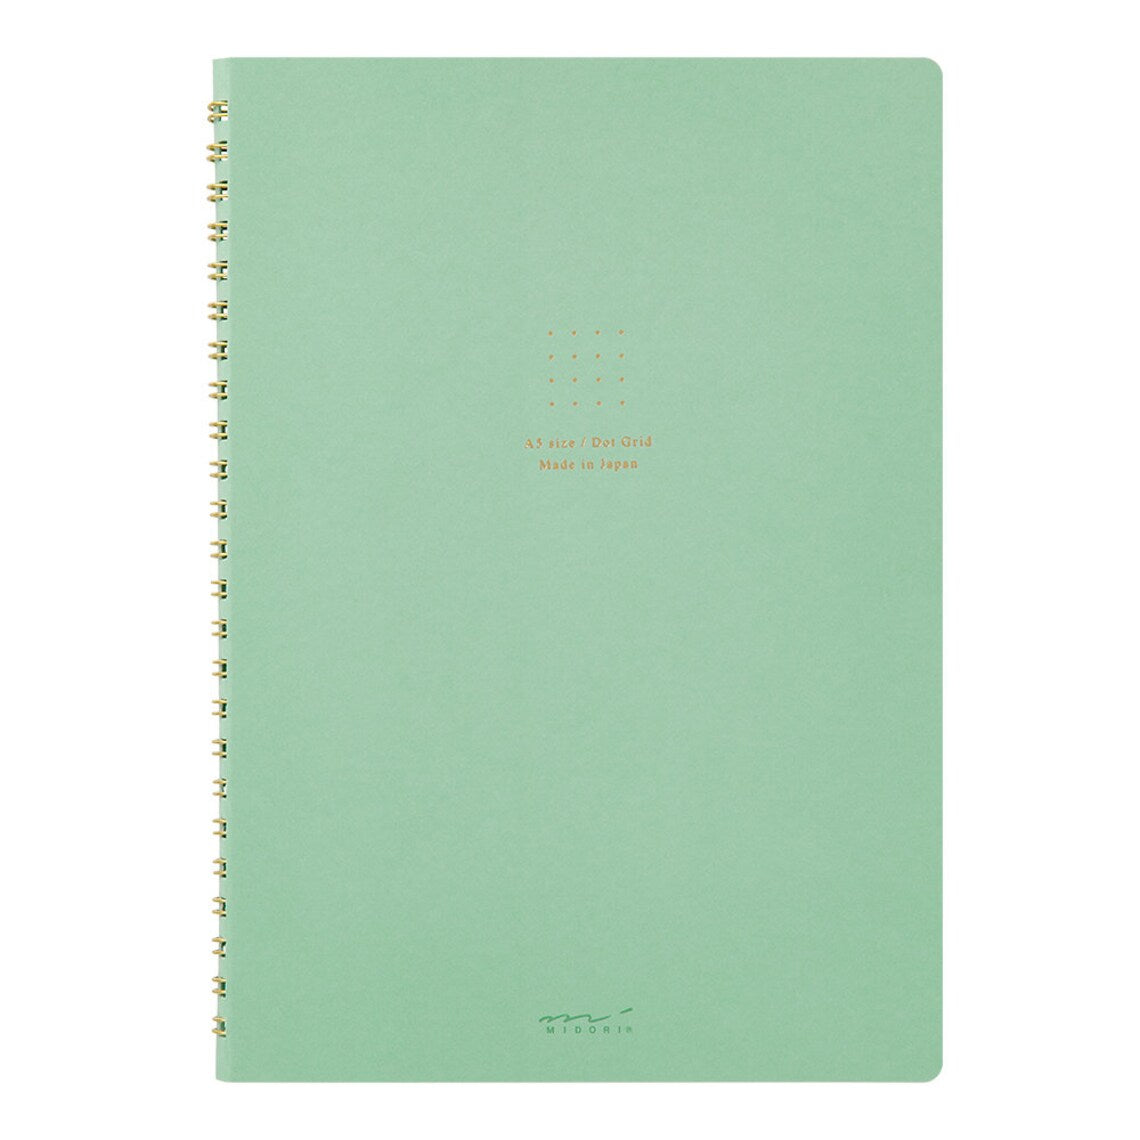 Midori Green A5 Ring Dotted Notebook cover - Paper Kooka Australia